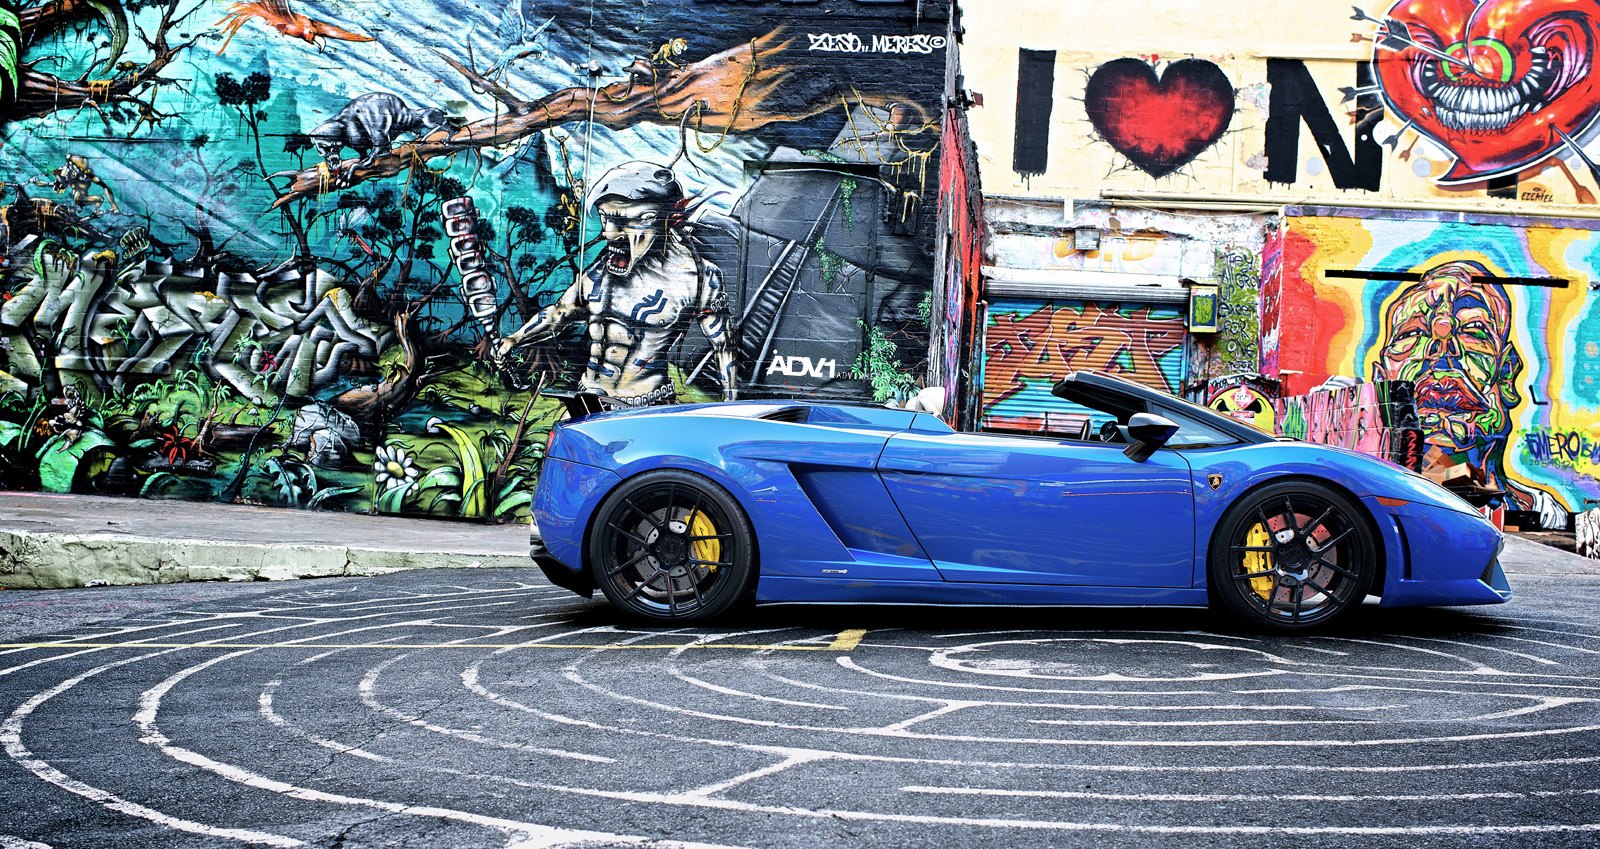 ADV1 Rims with Yellow Brakes on Blue Lamborghini Gallardo - Photo by ADV.1